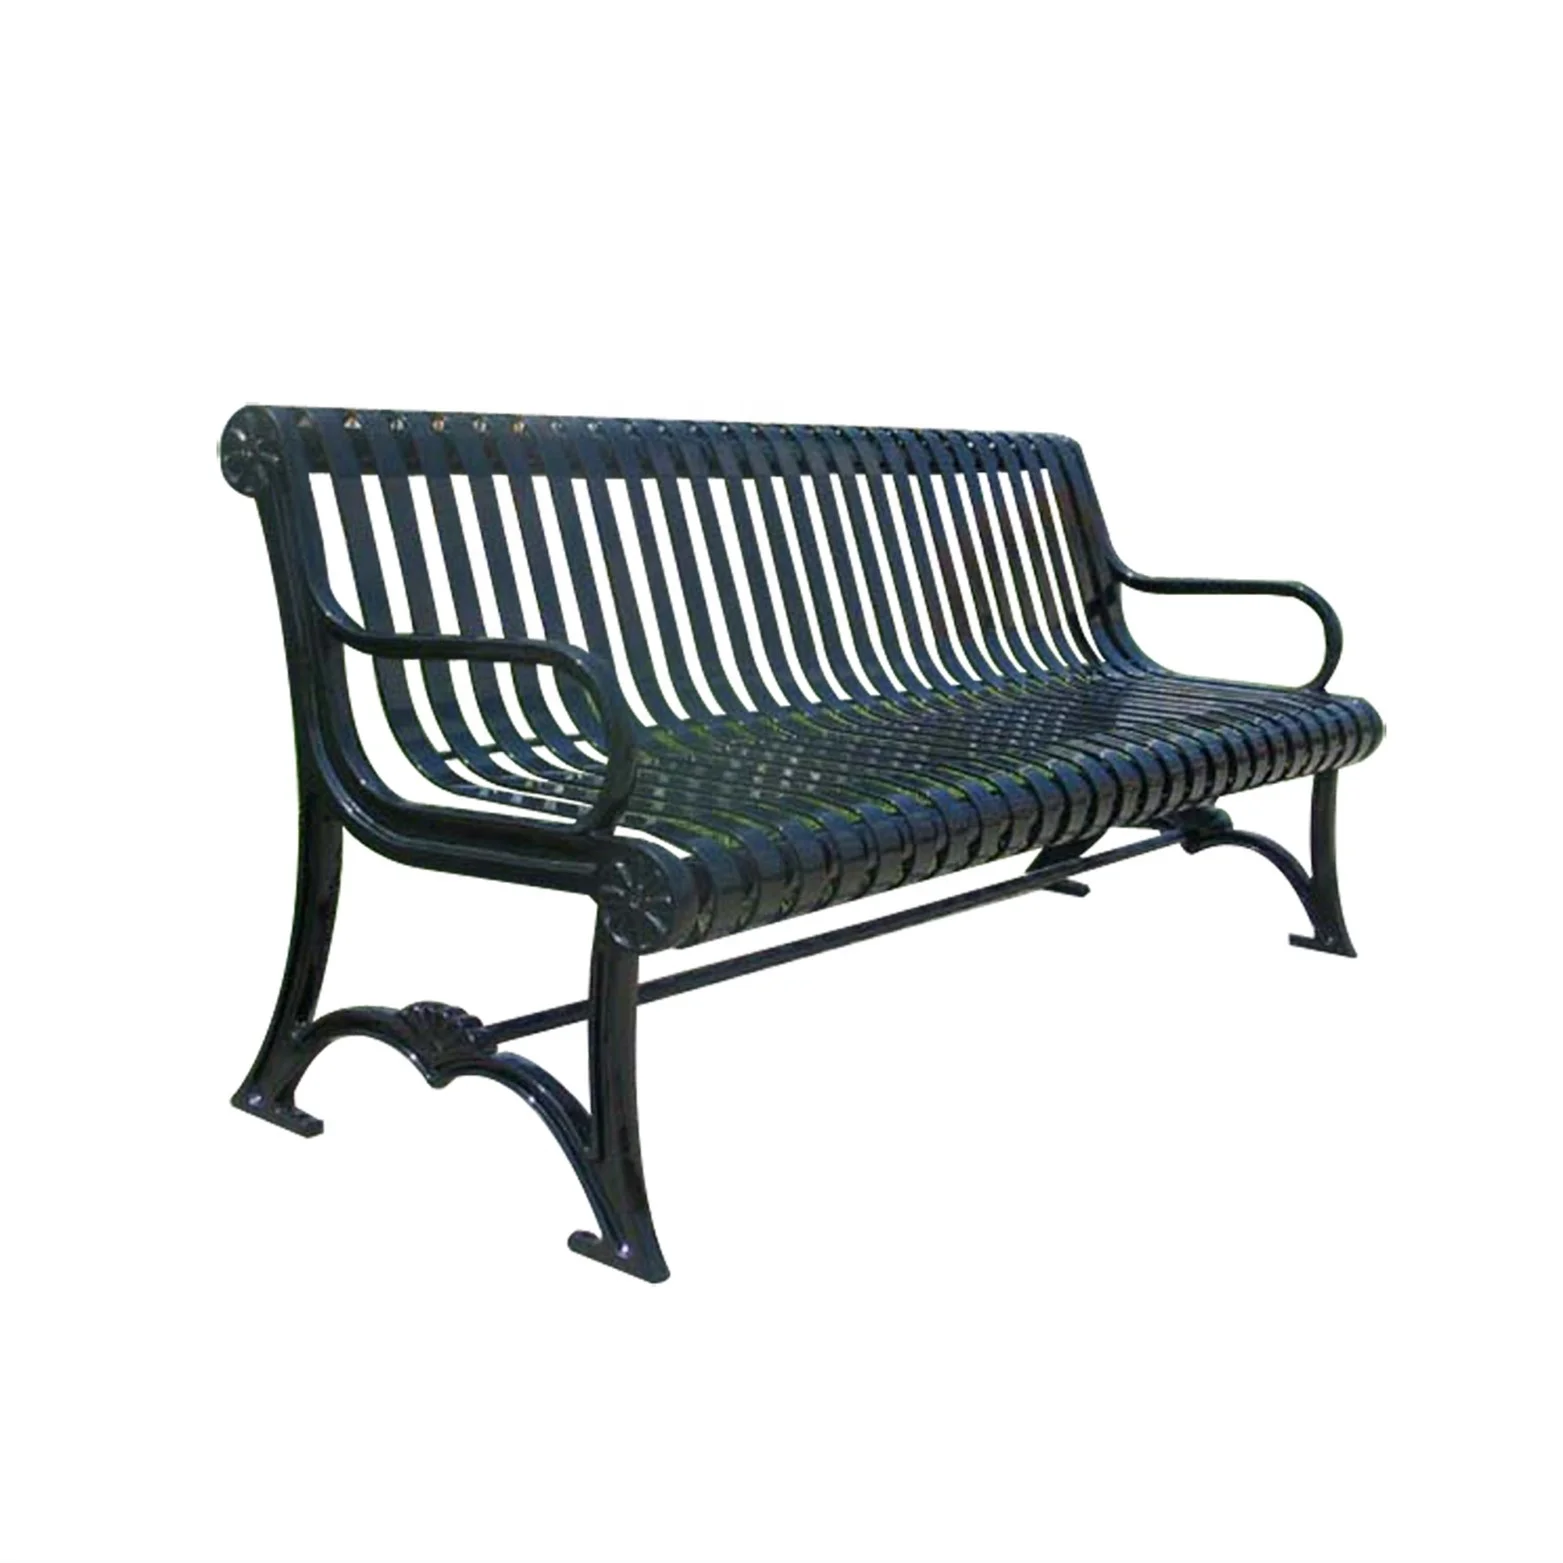 Wrought Iron Garden Bench With Flat Bar Seating Buy Wrought Iron Garden Bench